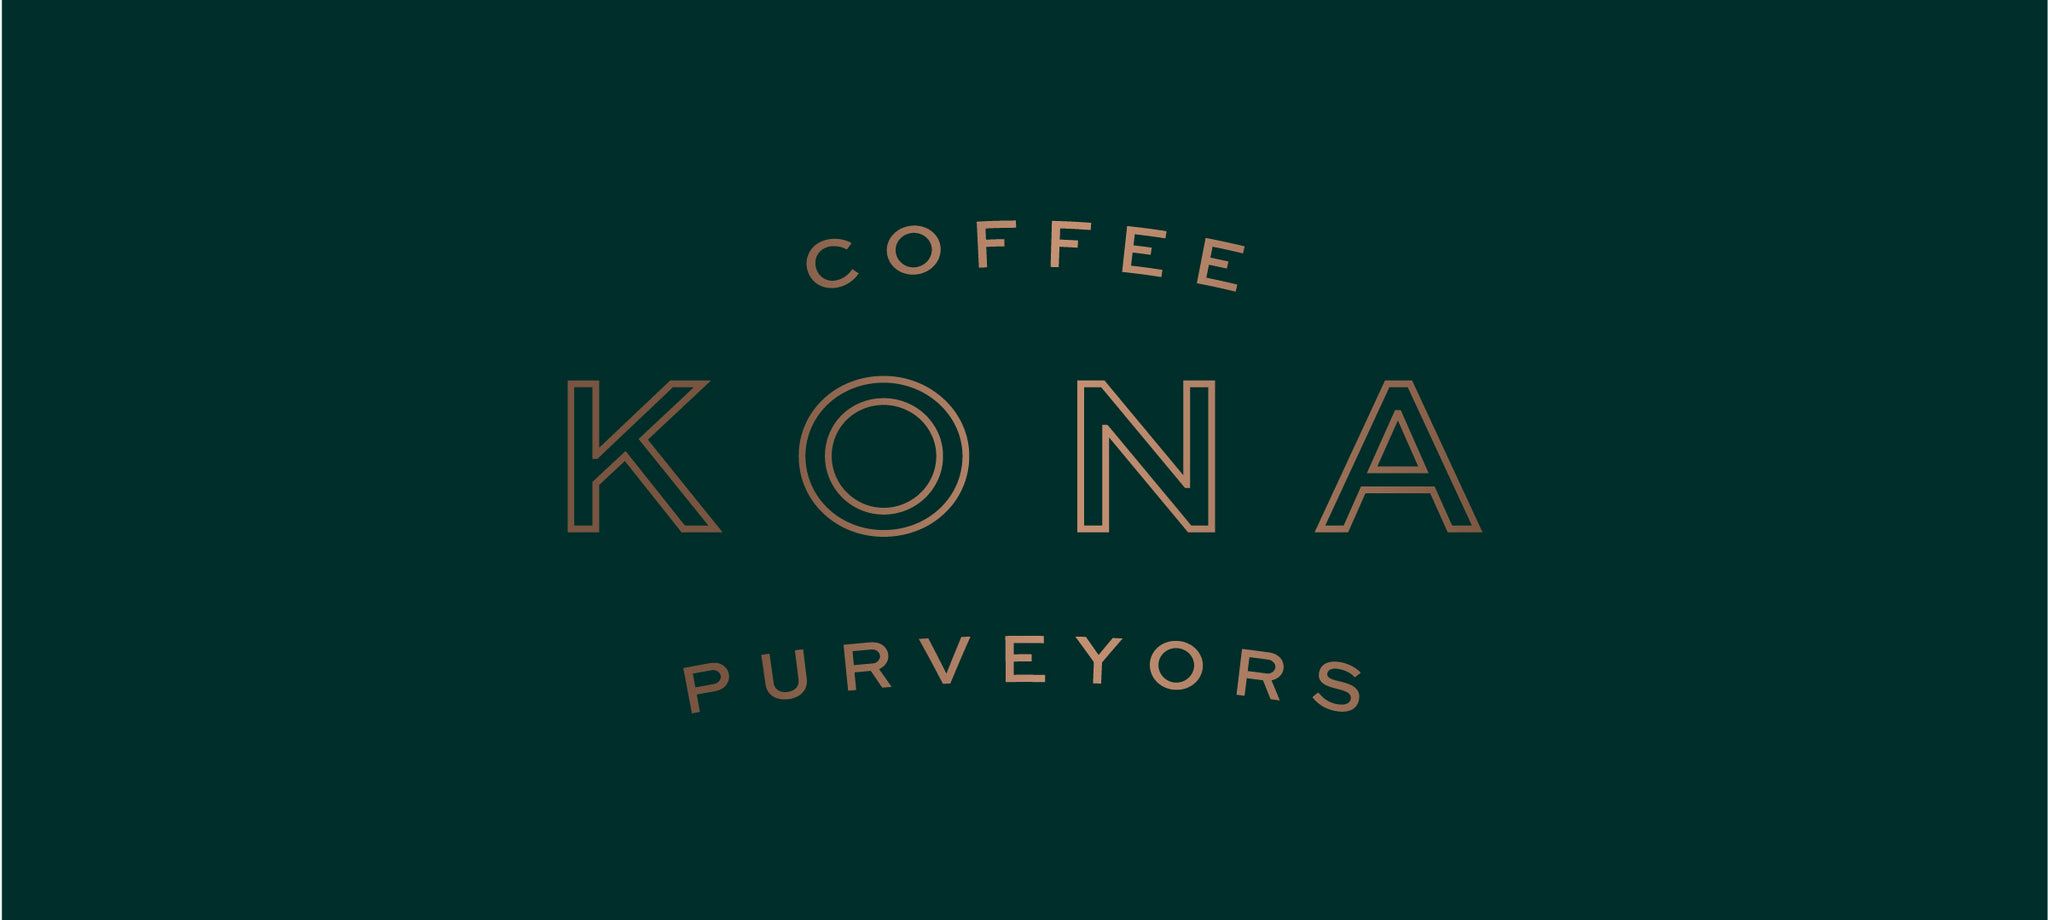 Kona Coffee Purveyors brand design